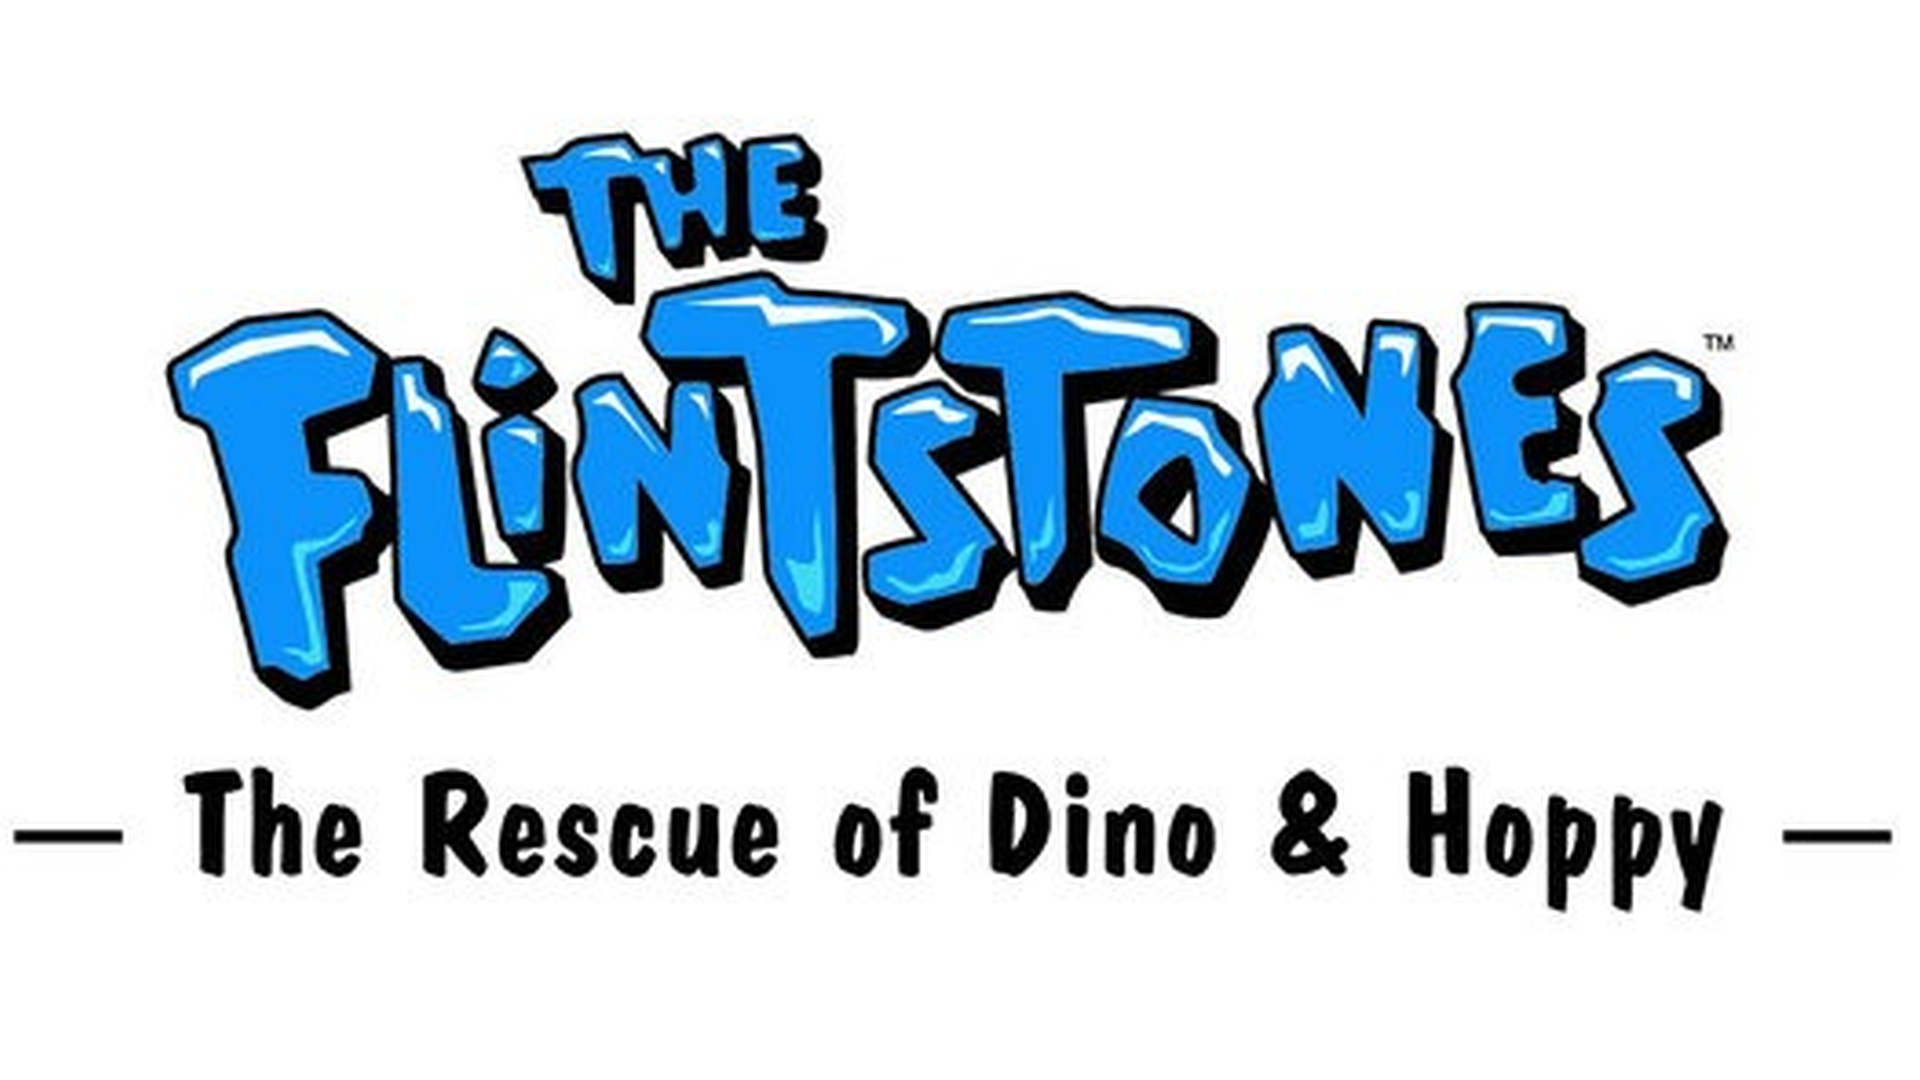 The Flintstones: The Rescue of Dino and Hoppy Logo